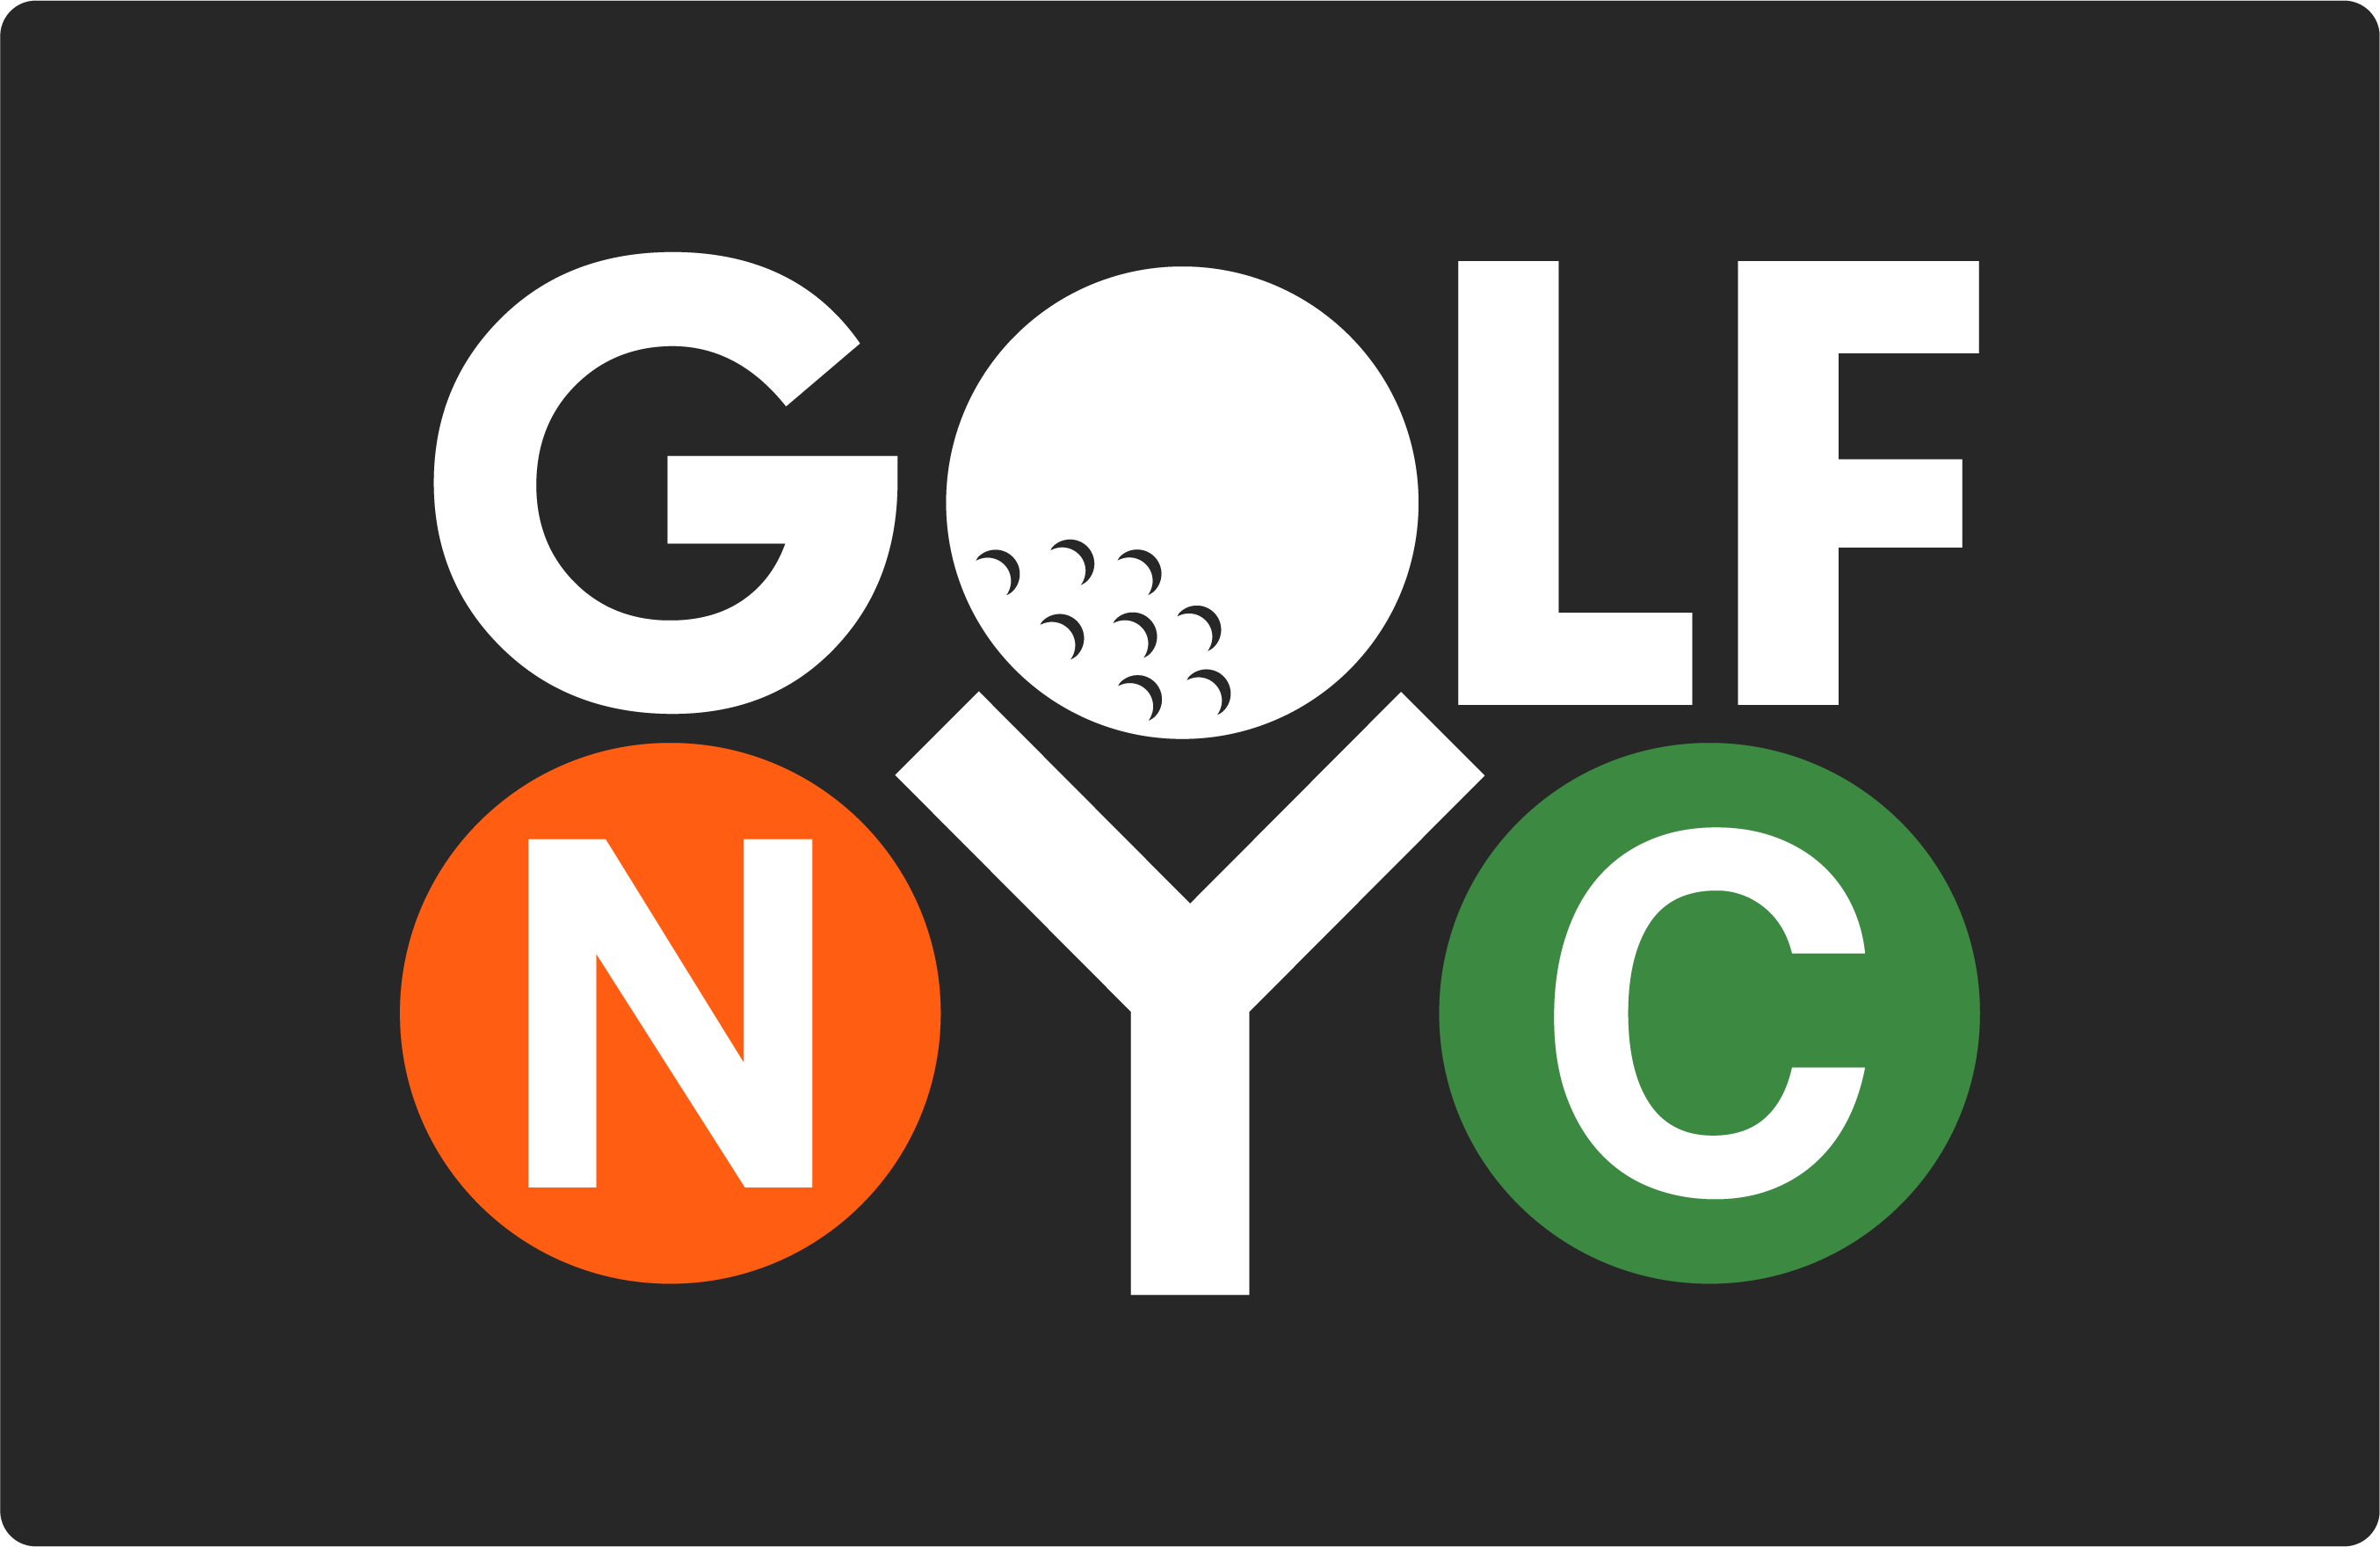 Van Cortlandt Park Golf Course Review - Public Golf Course in Bronx NYC